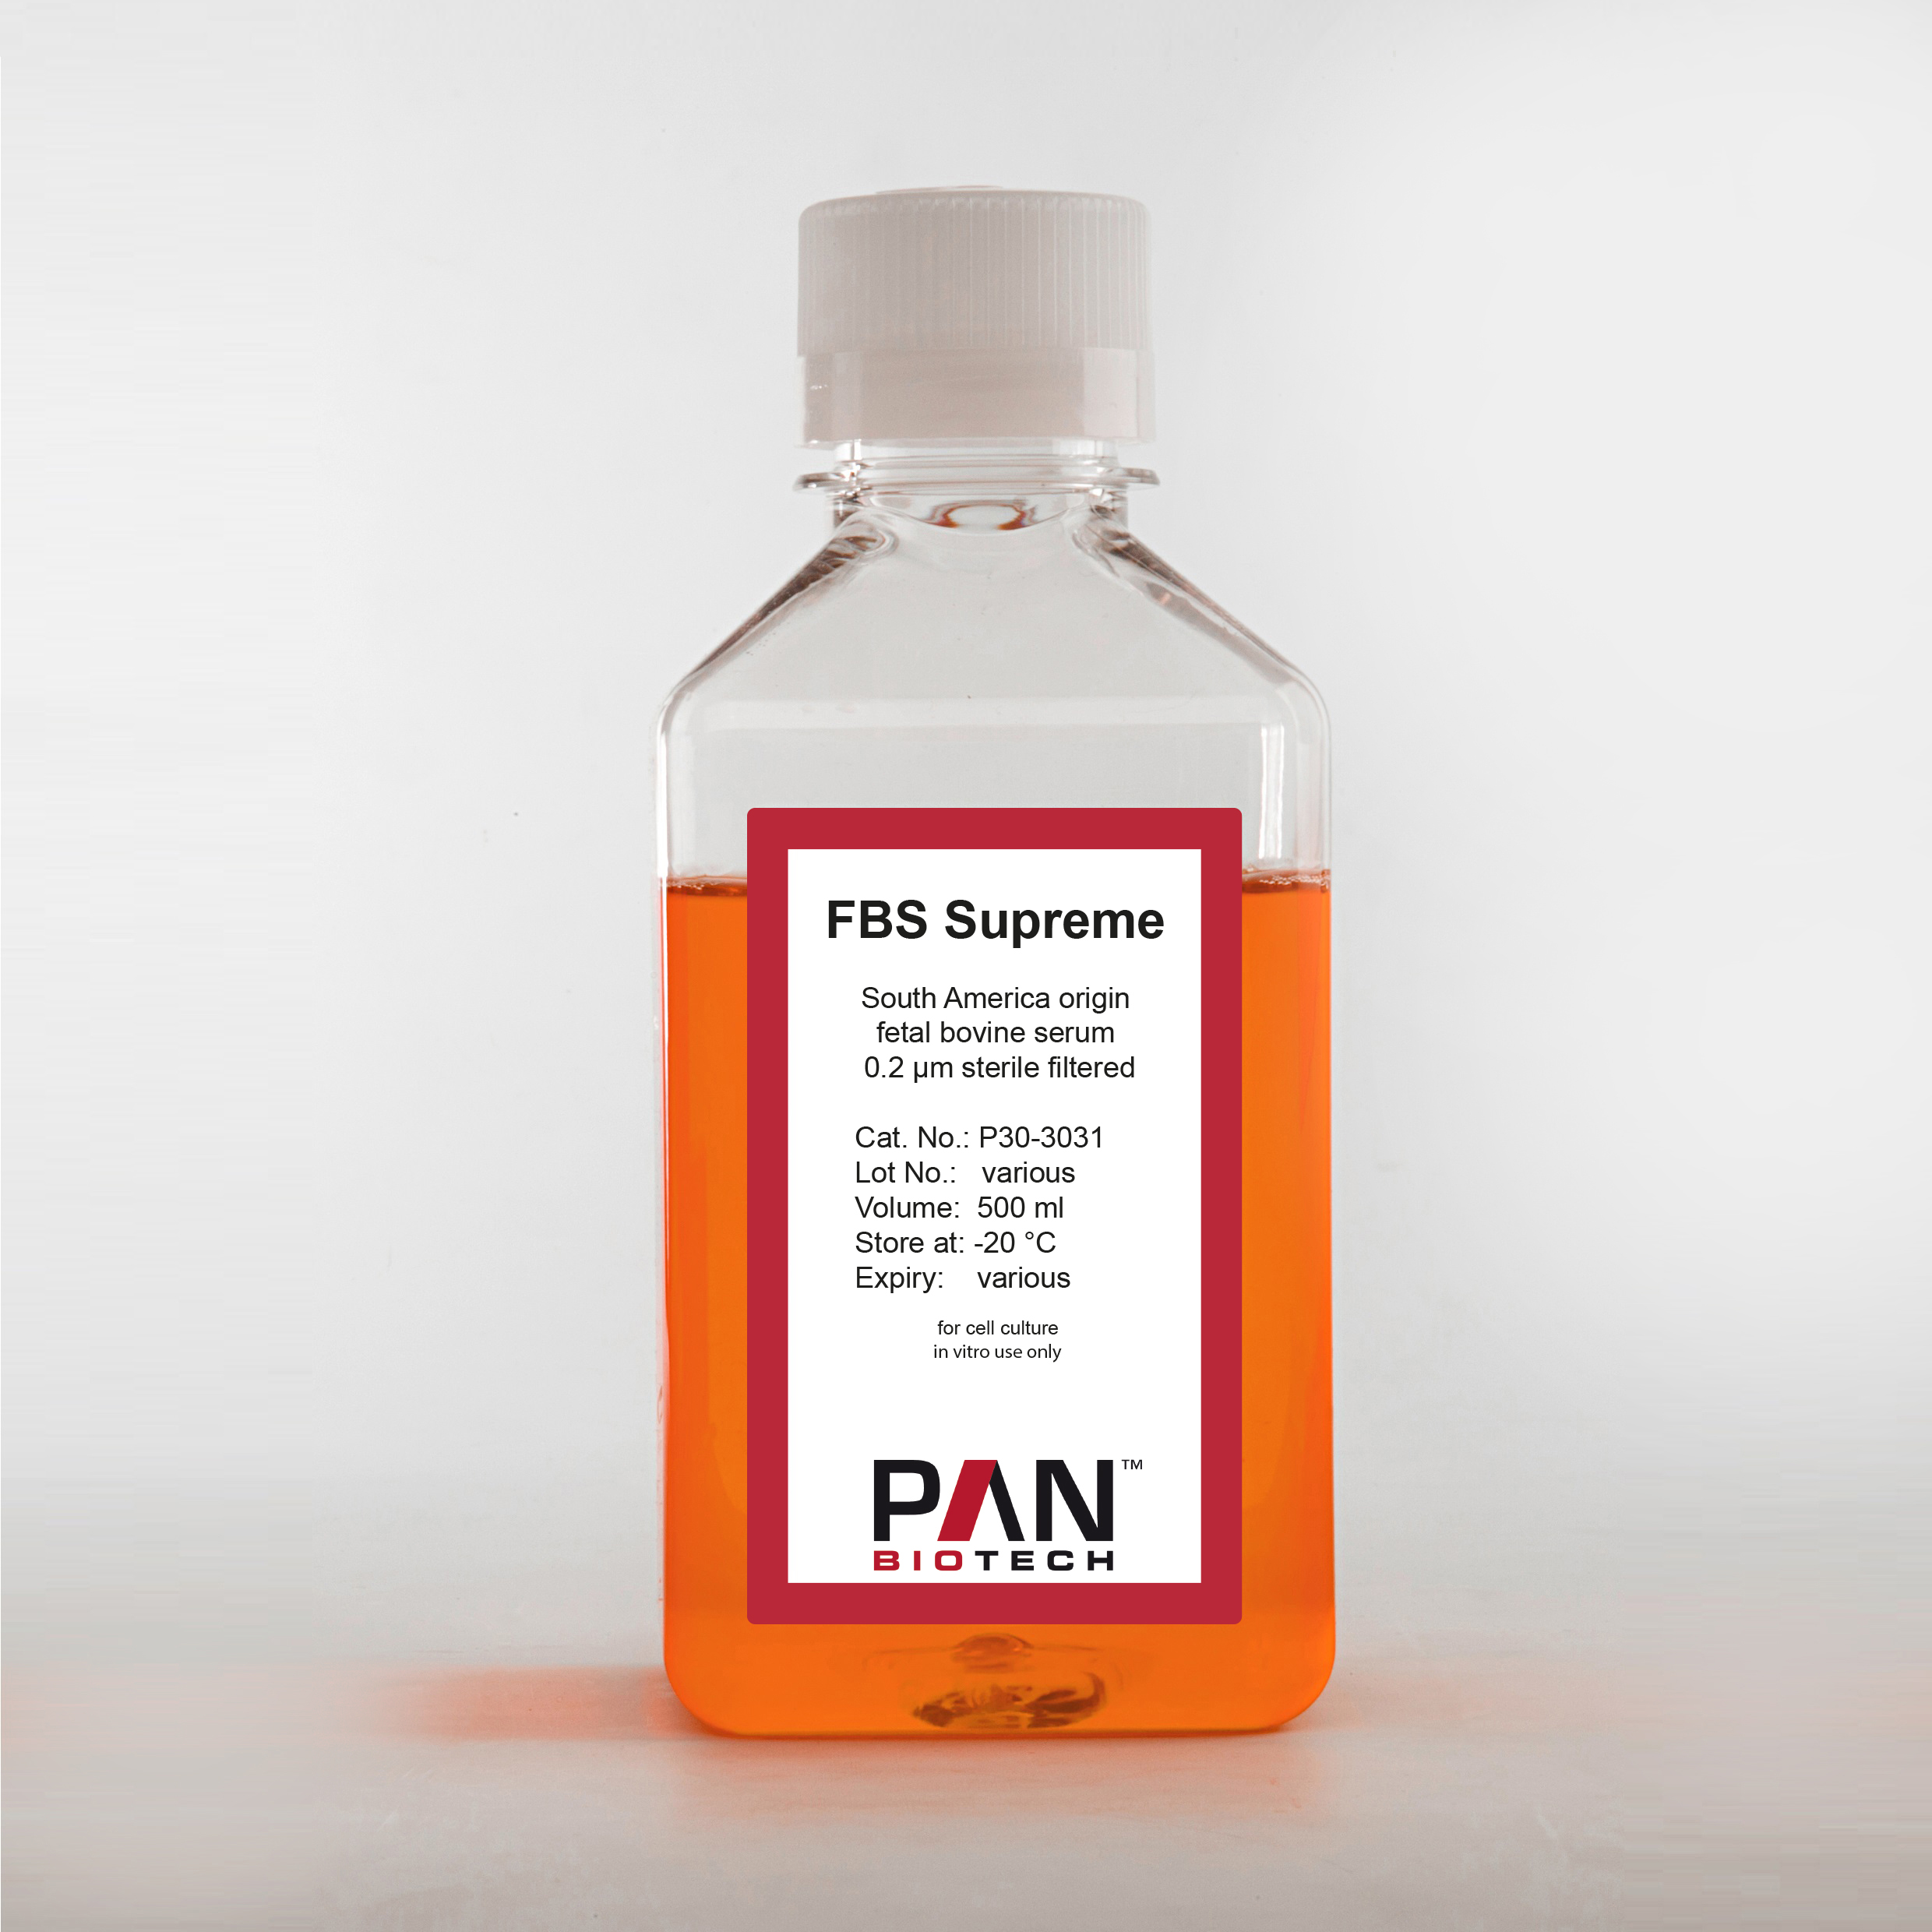 FBS Supreme, South America origin, fetal bovine serum, 0.2 µm sterile filtered